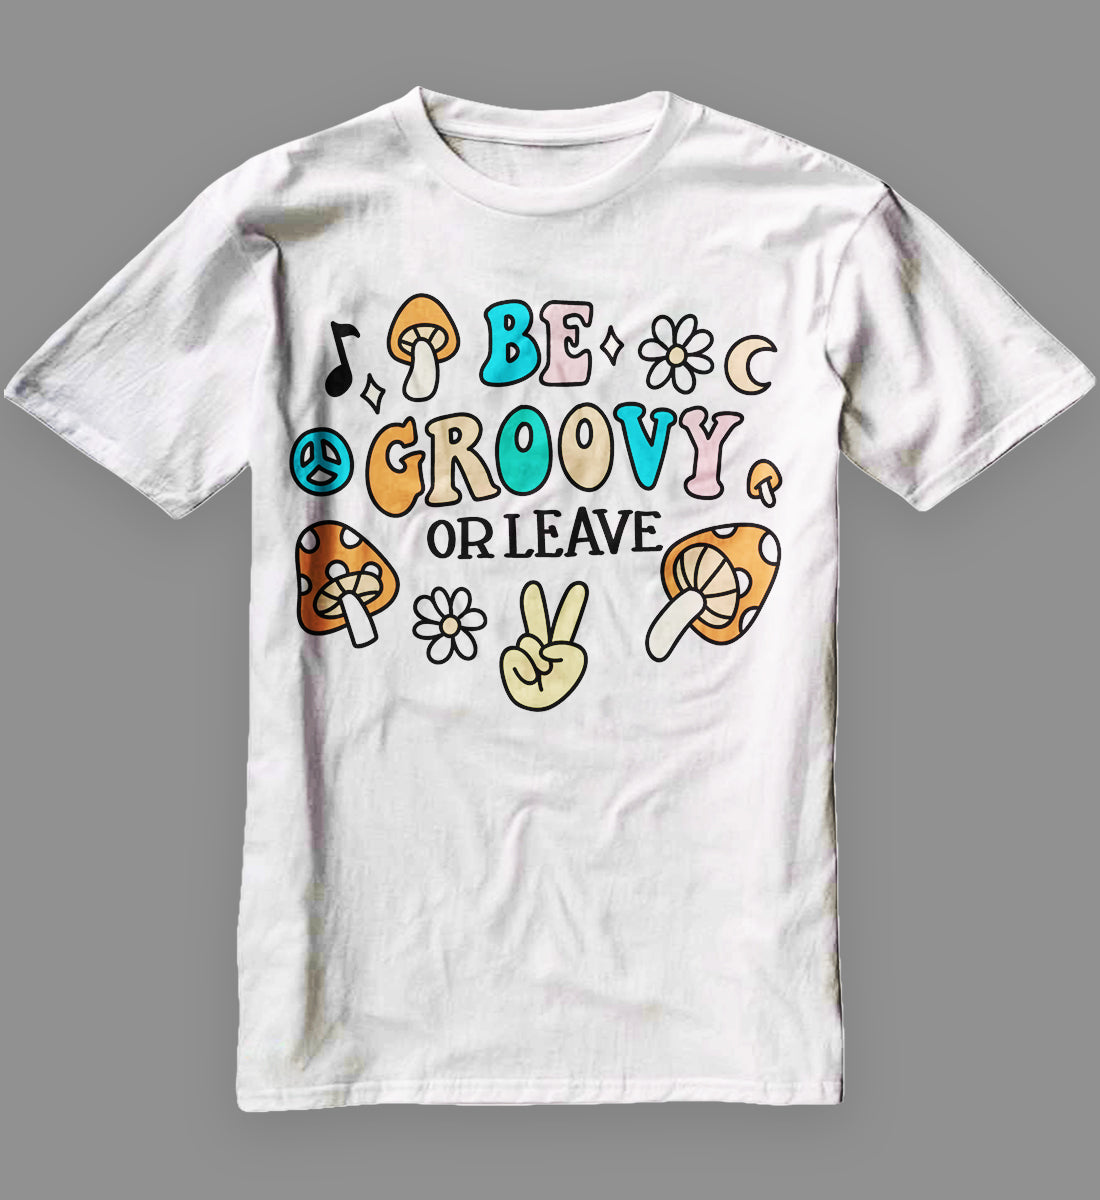 Groovy Retro T Shirt